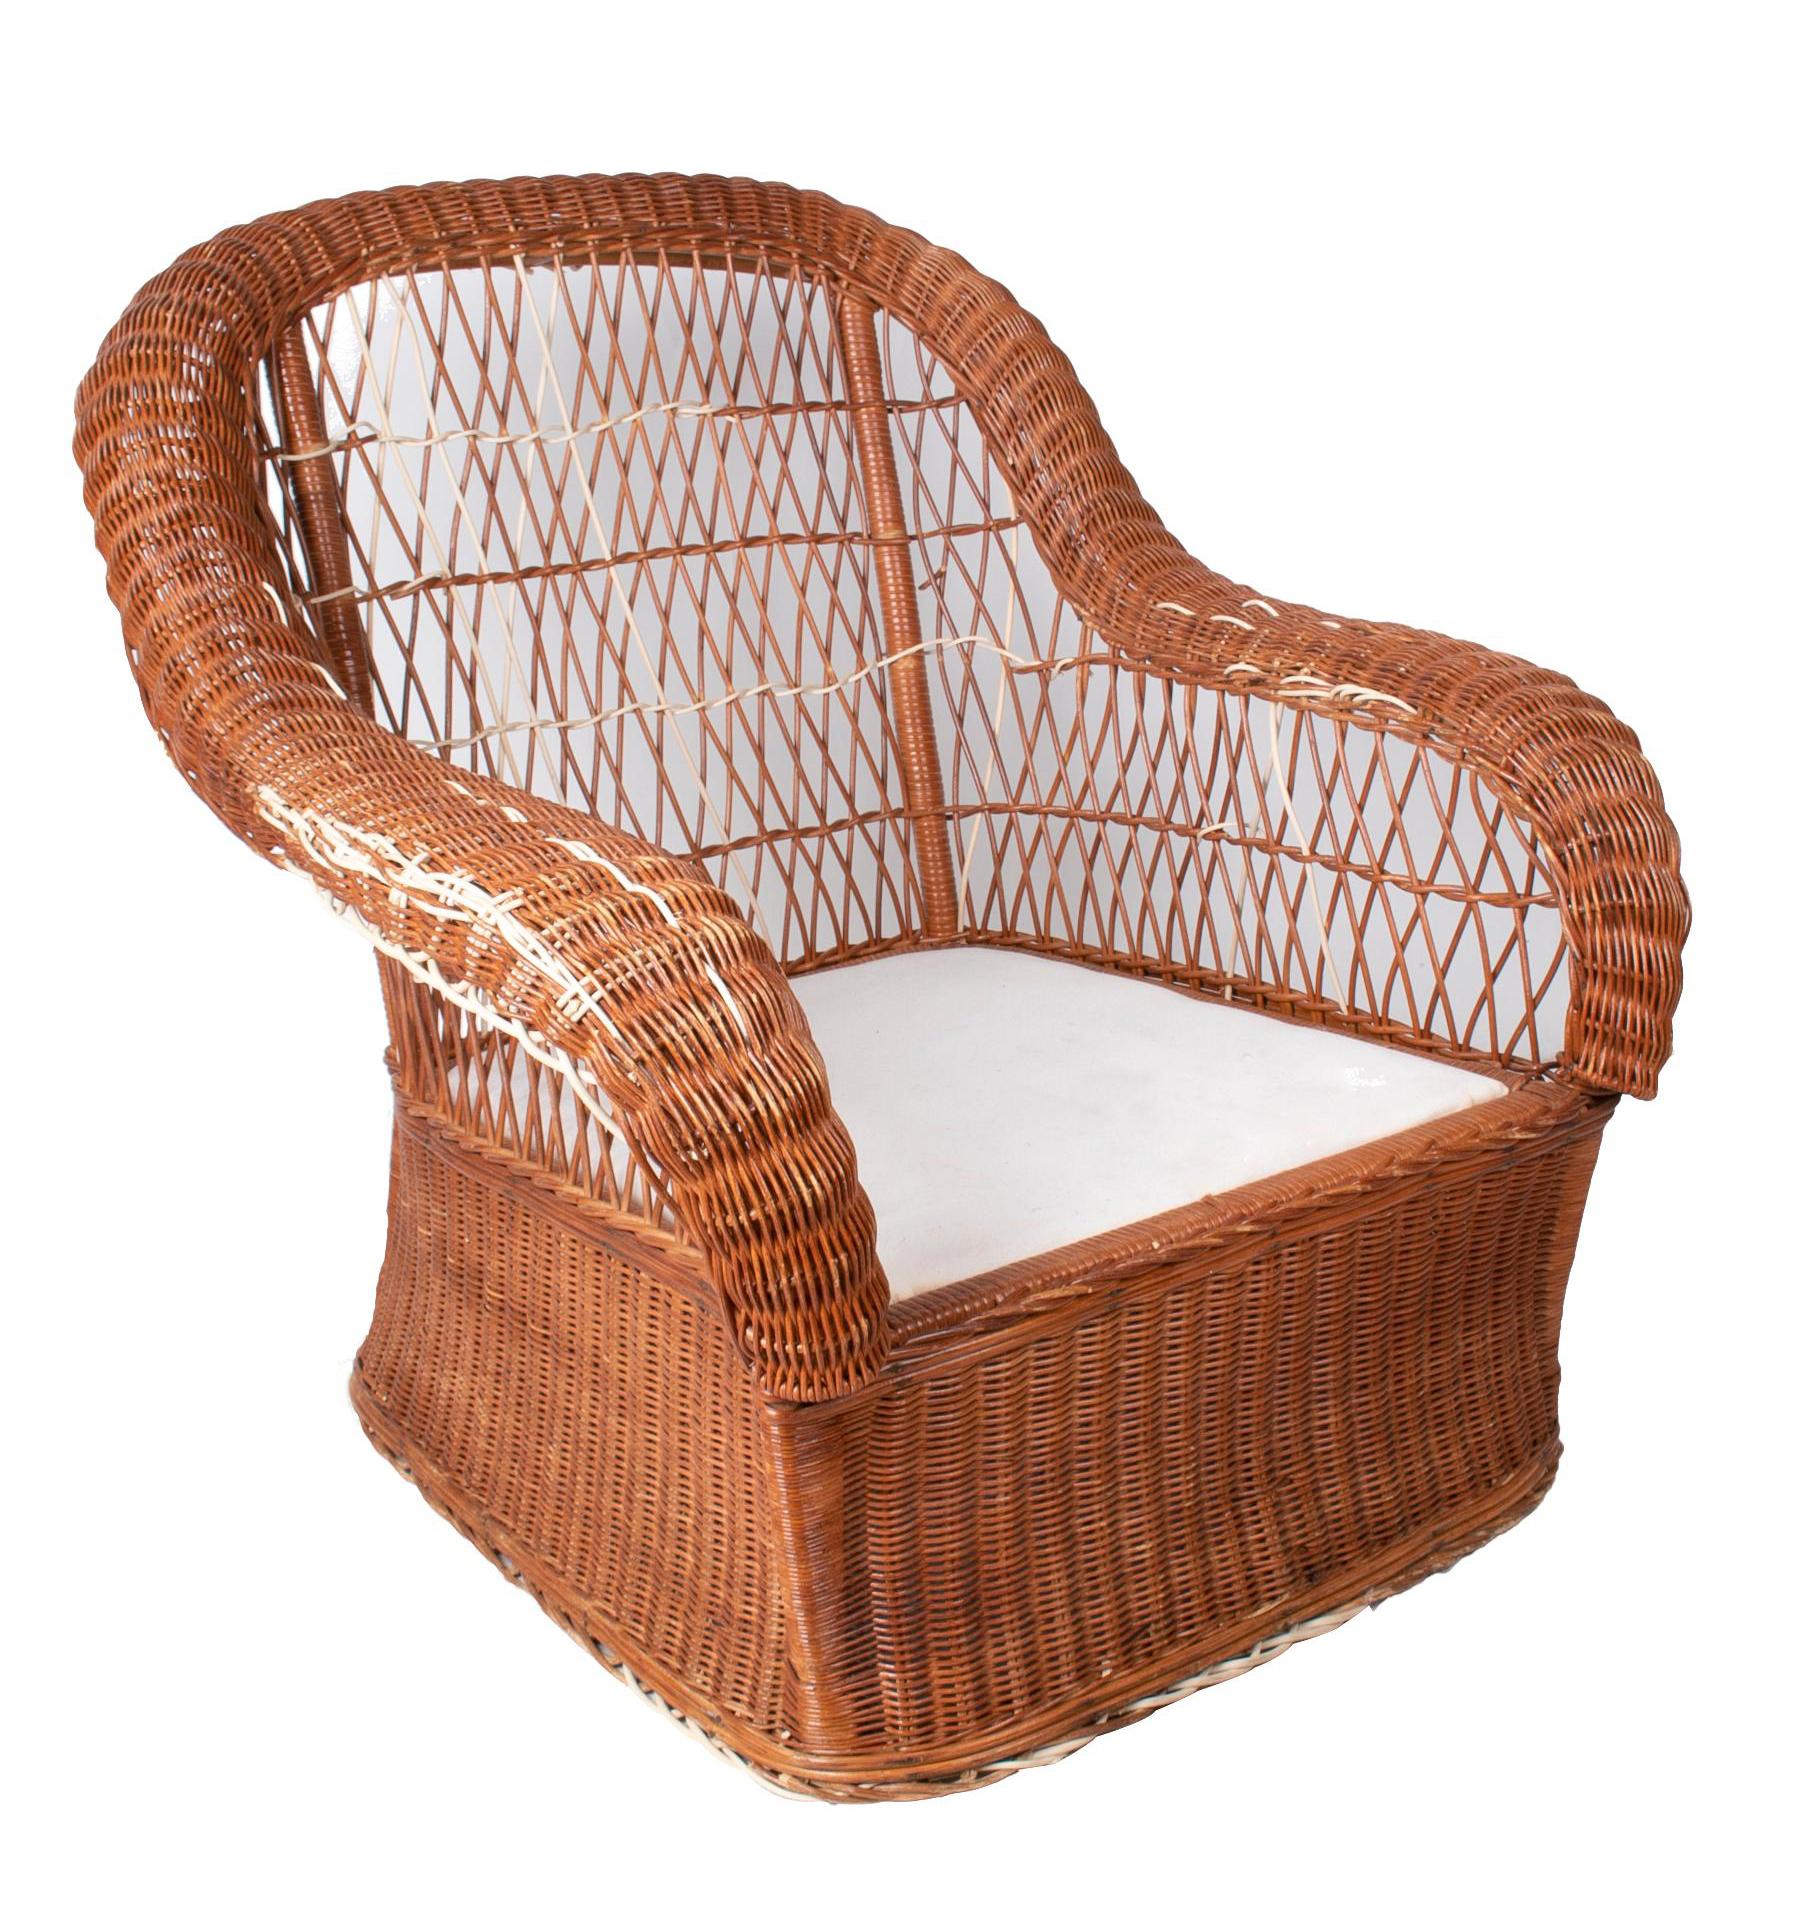 1980s set of four hand woven rattan garden armchairs.